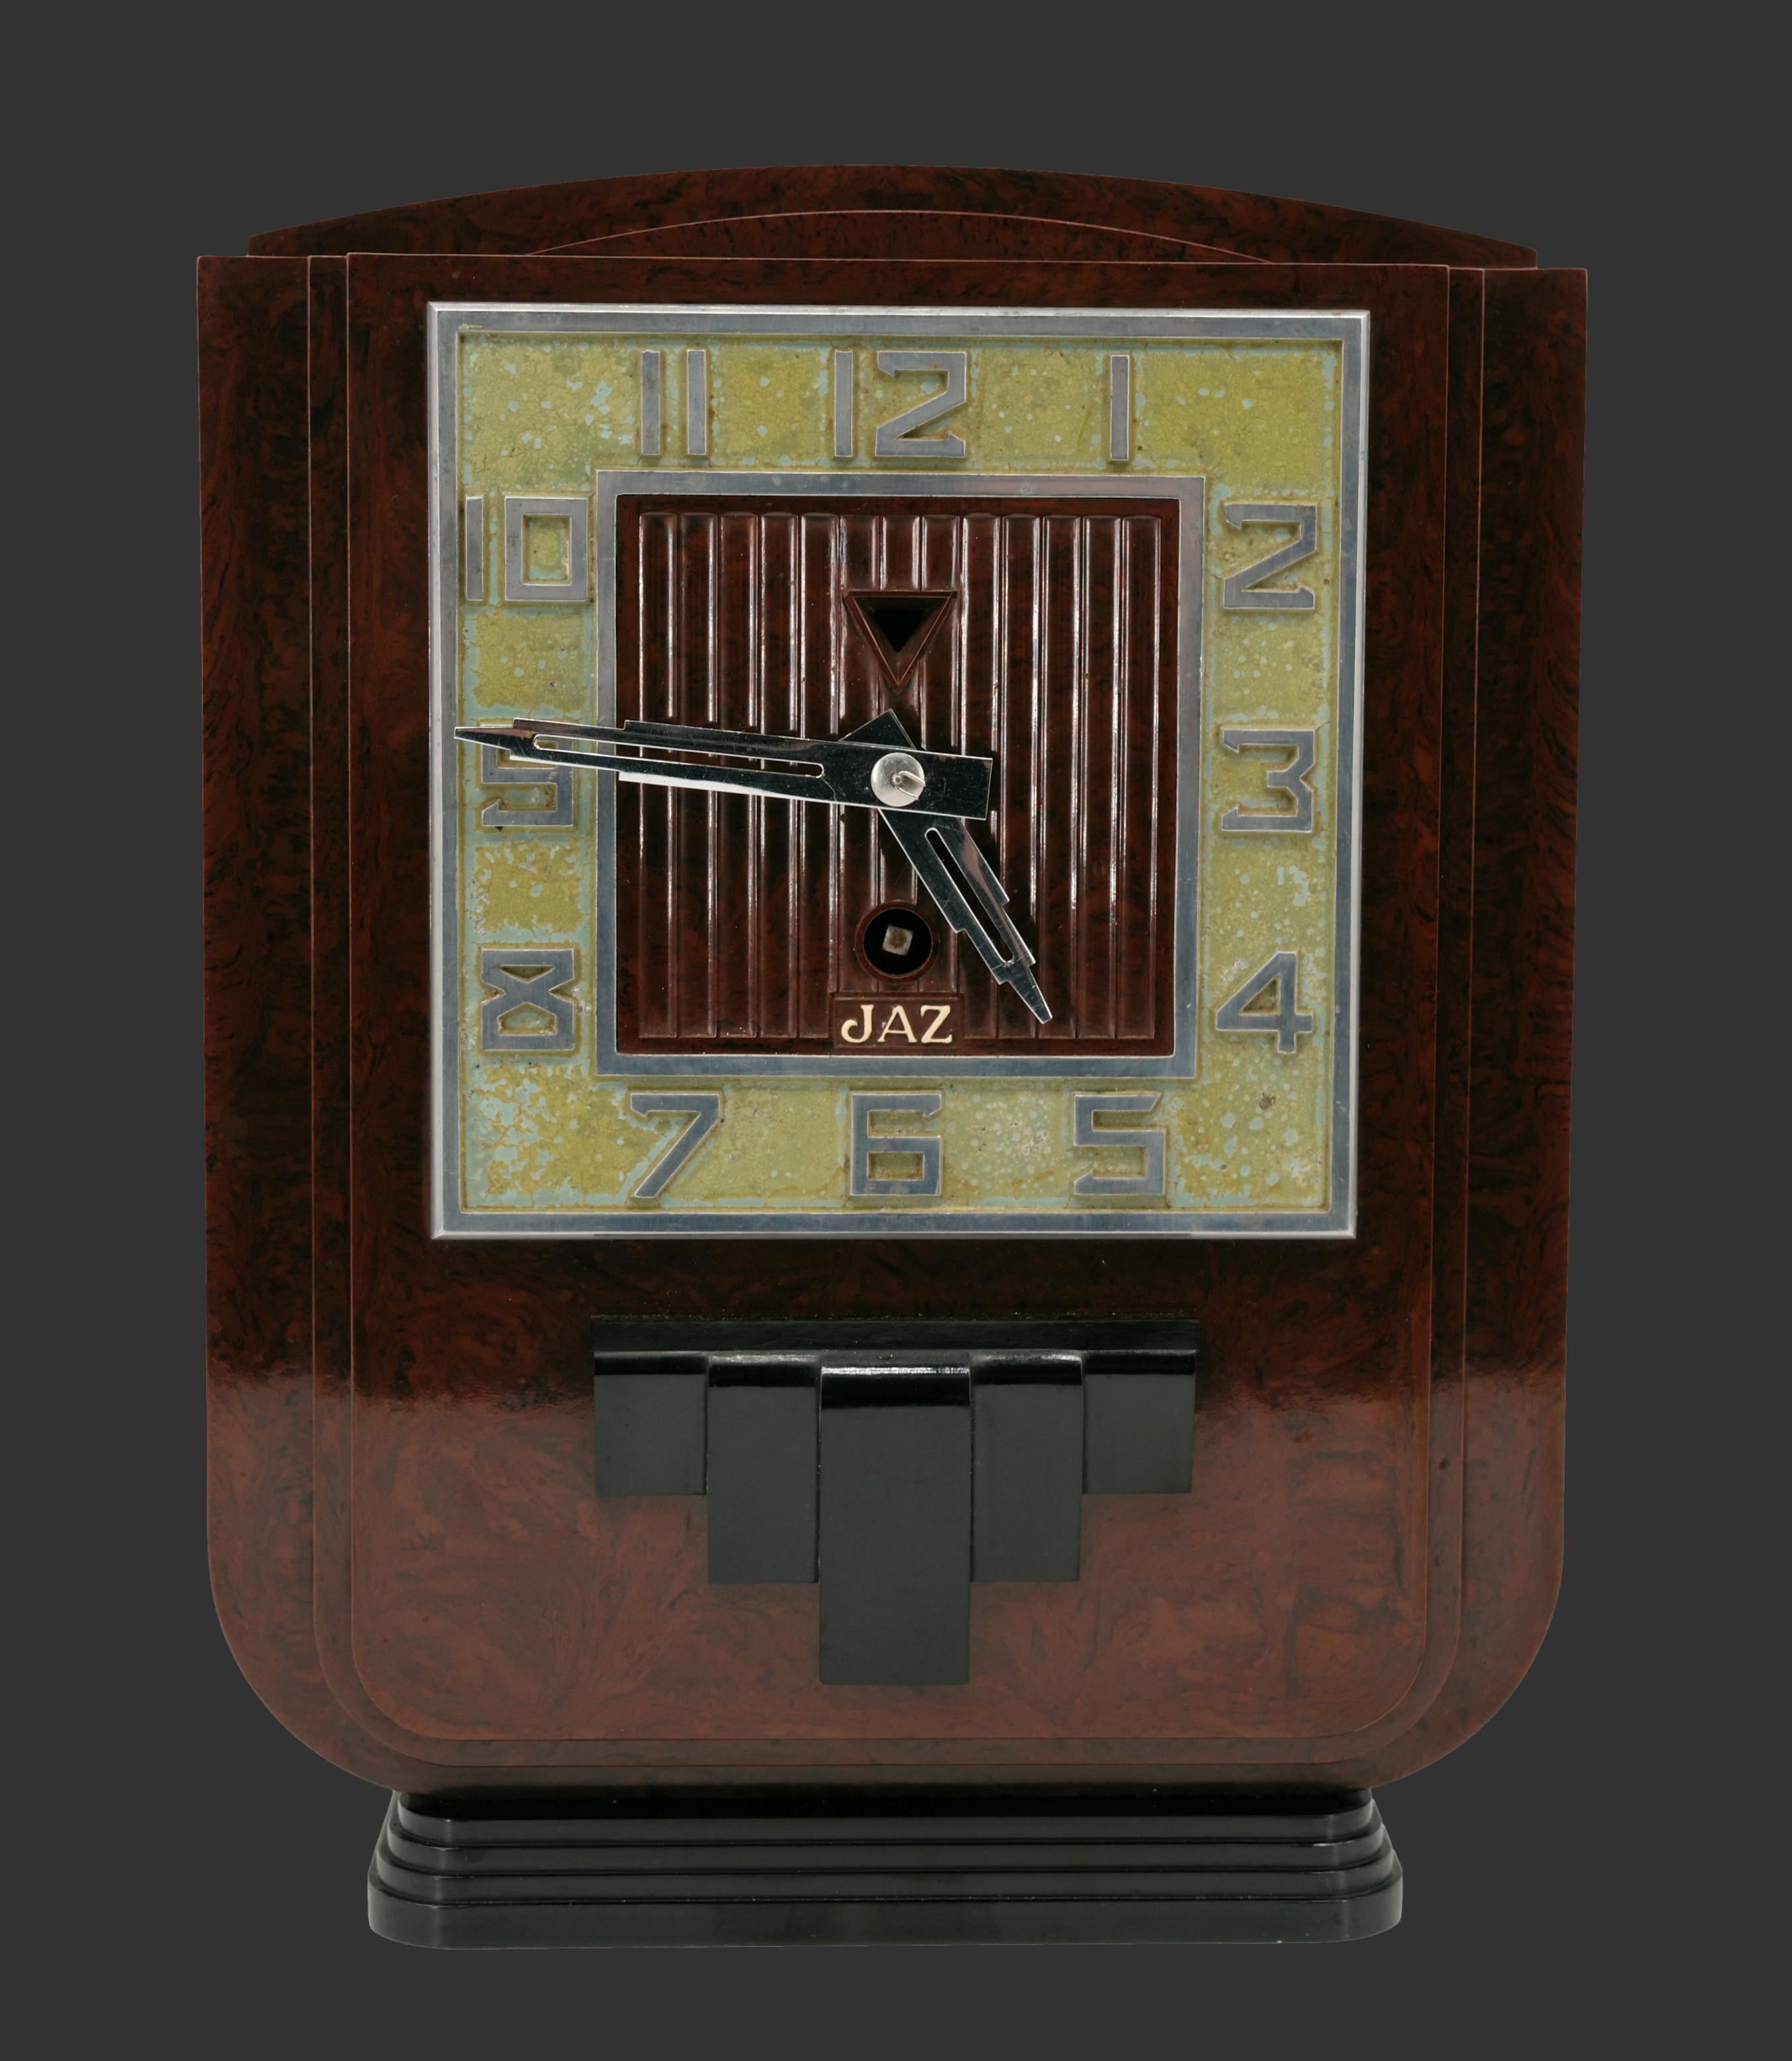 French Art Deco bakelite clock by JAZ, France, 1934. Height: 9.6